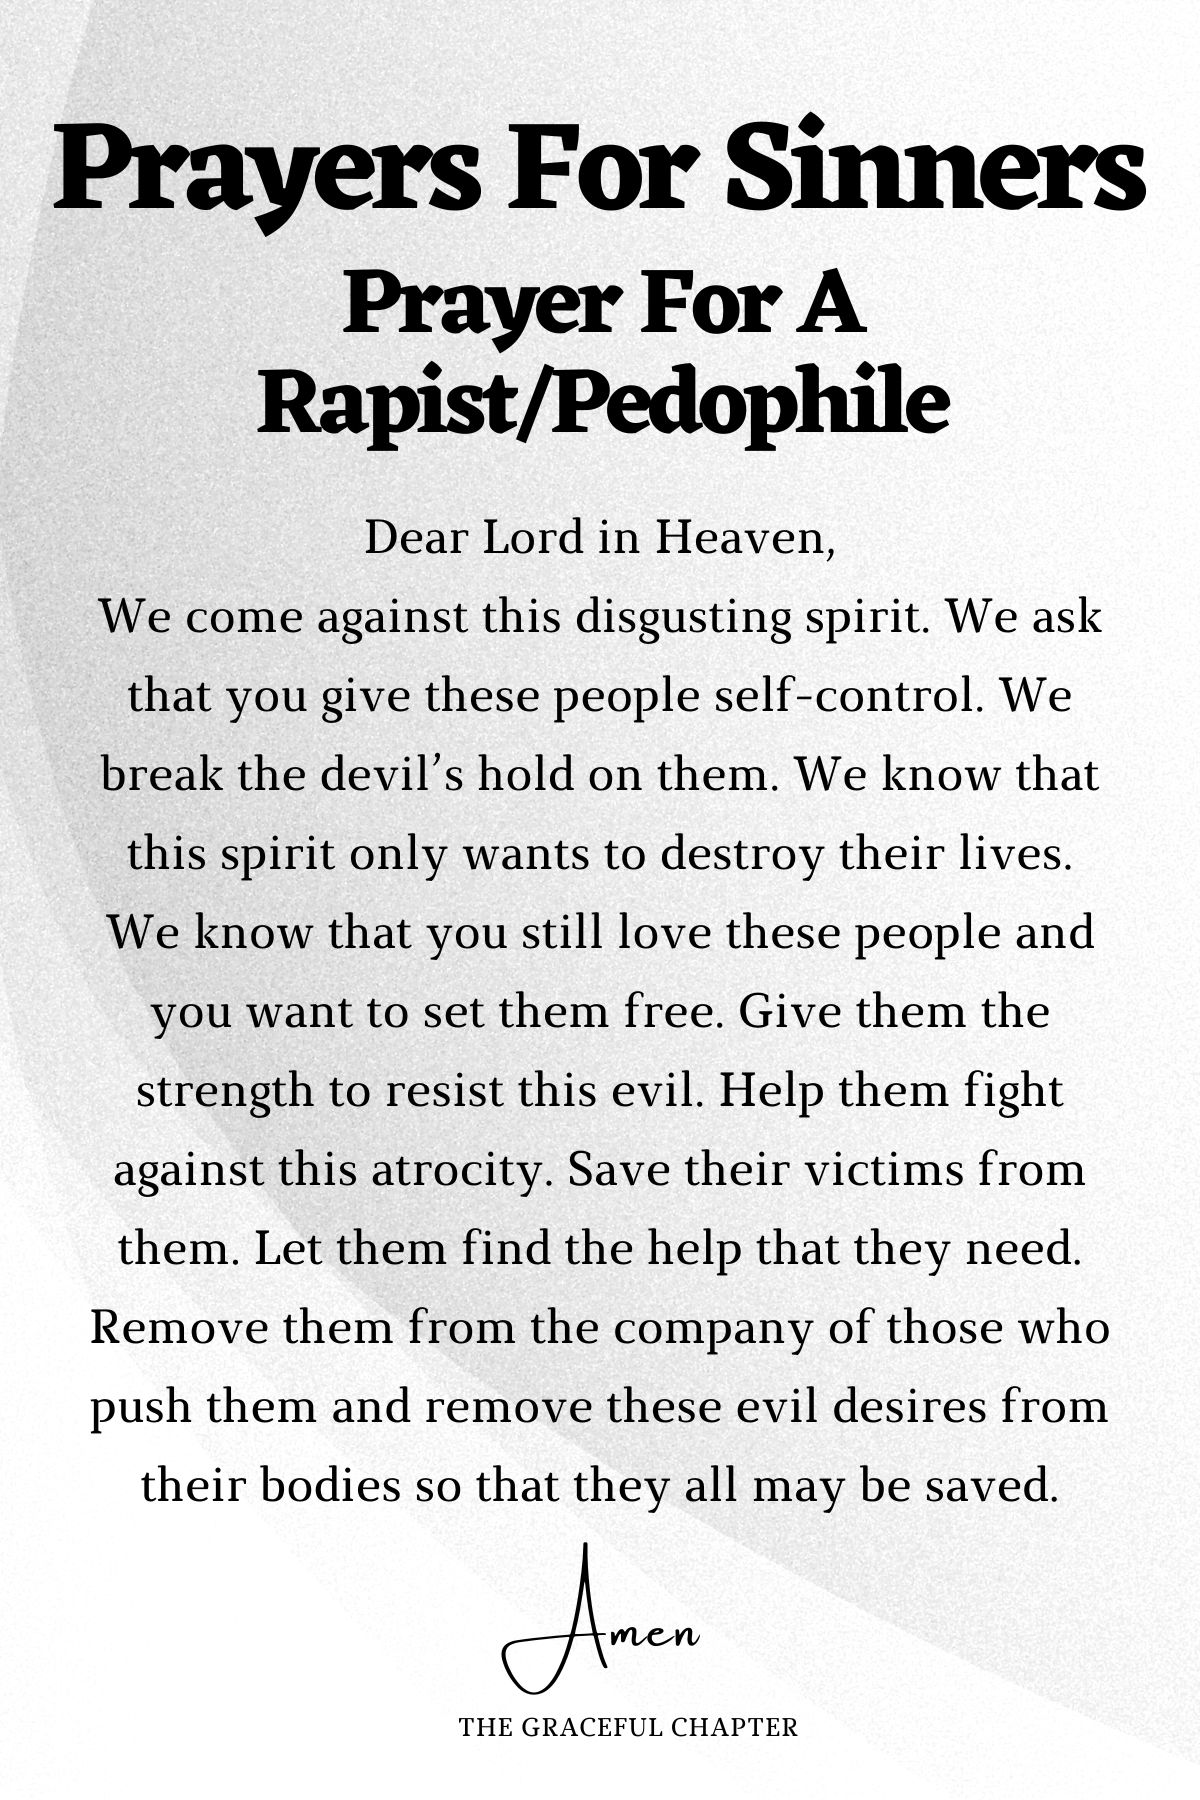 Prayer for a rapist/pedophile